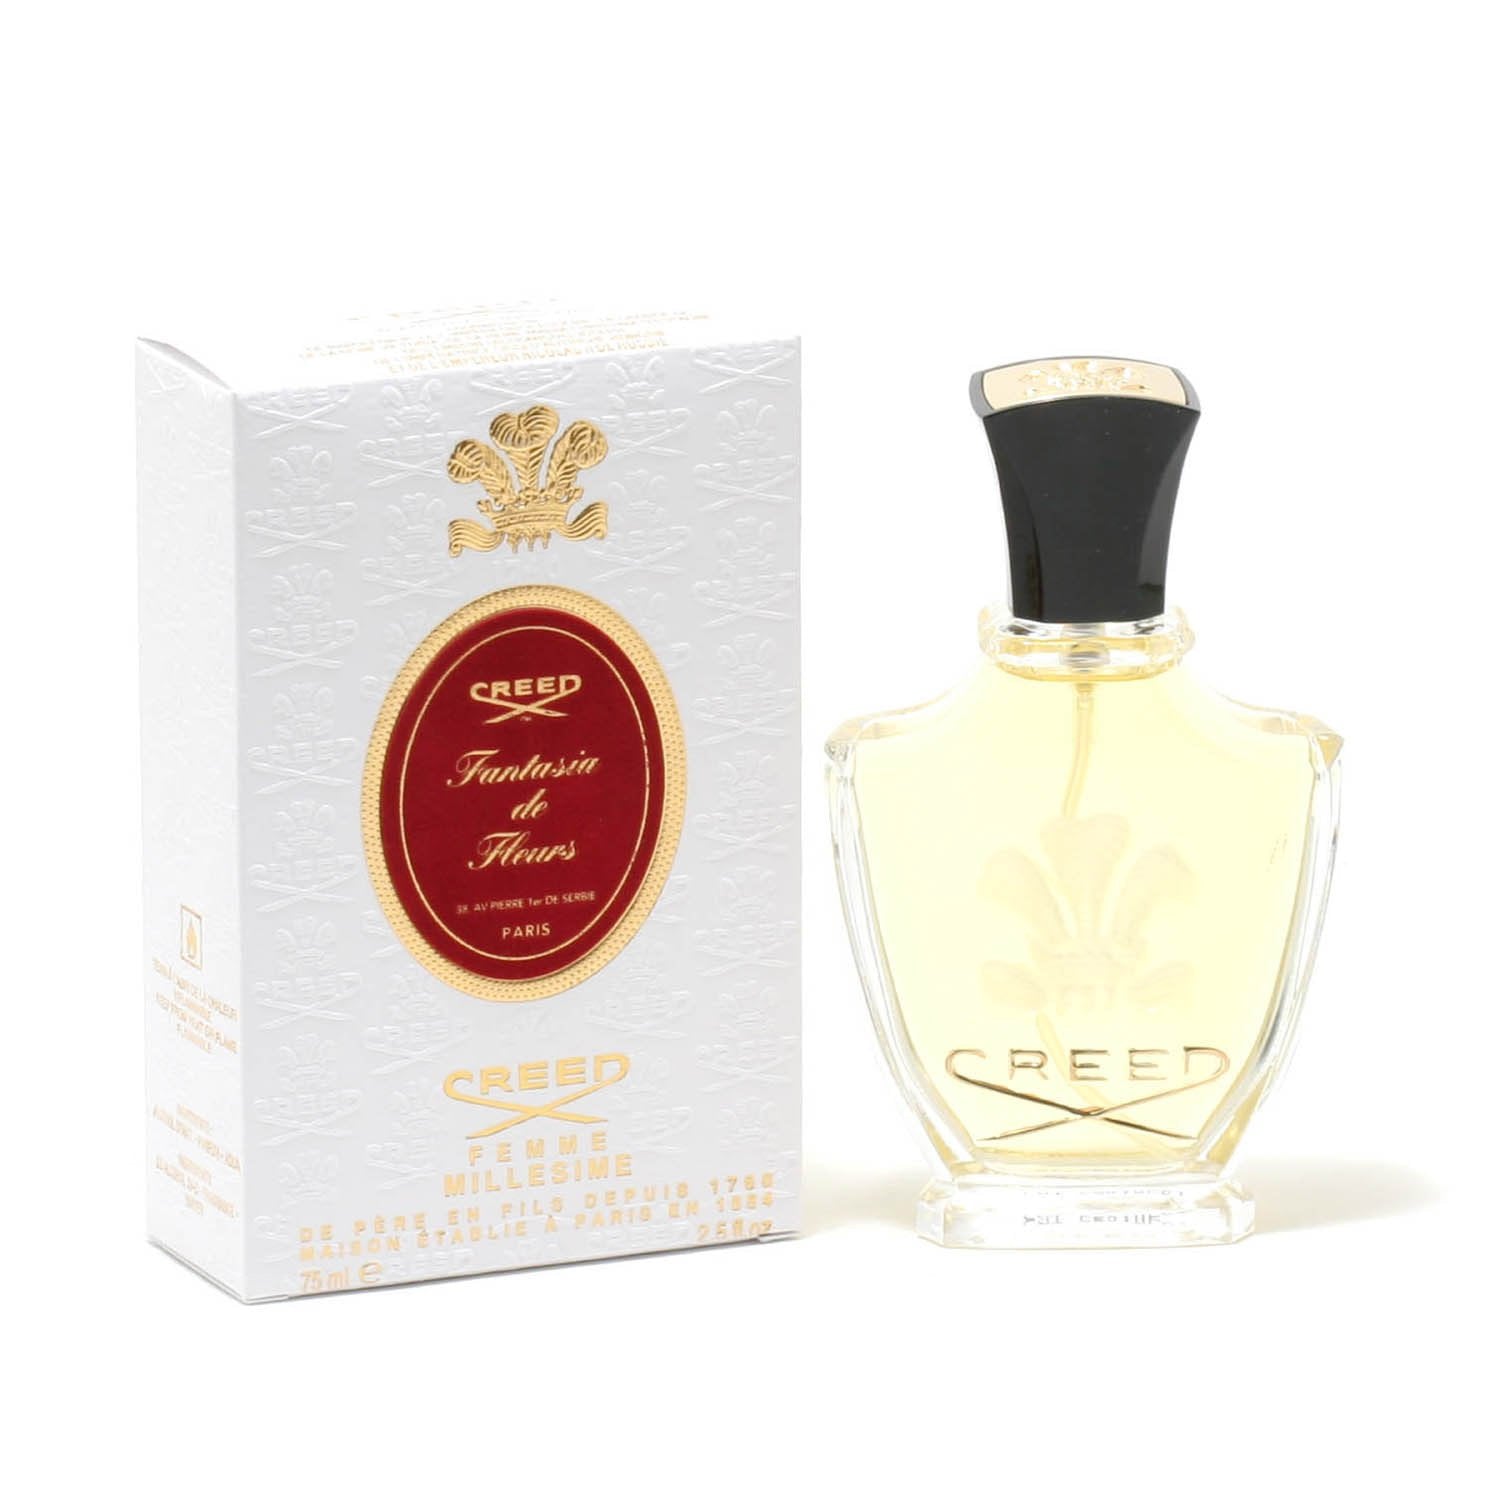 Perfume - CREED FANTASIA D'FLEURS FOR WOMEN - EAU DE PARFUM SPRAY, 2.5 OZ